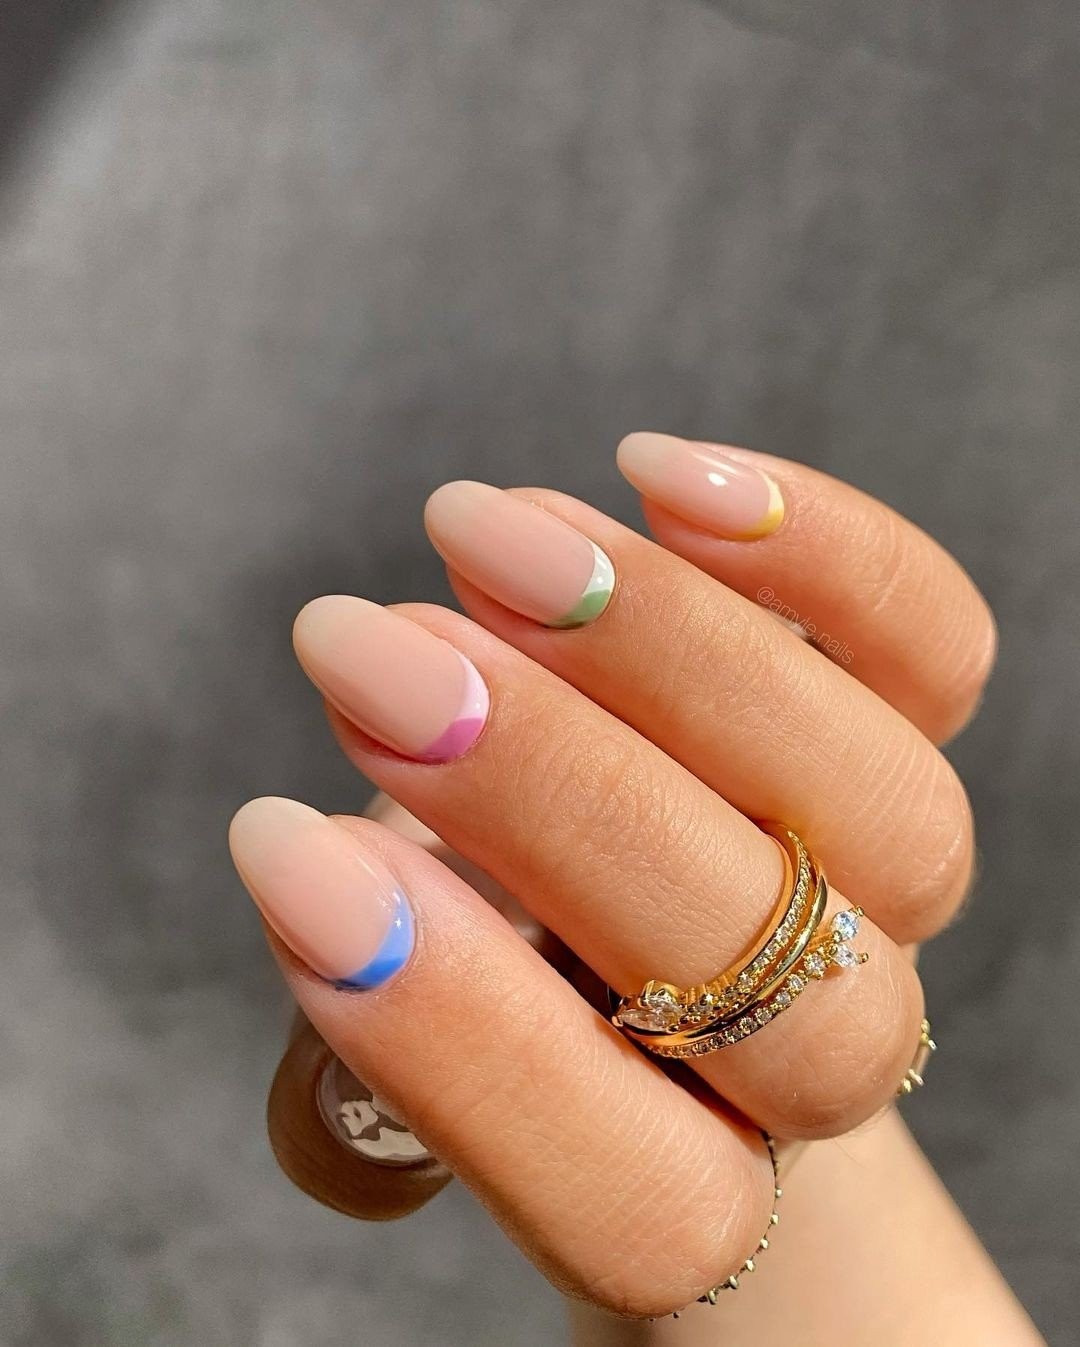 nails-manicure.jpg